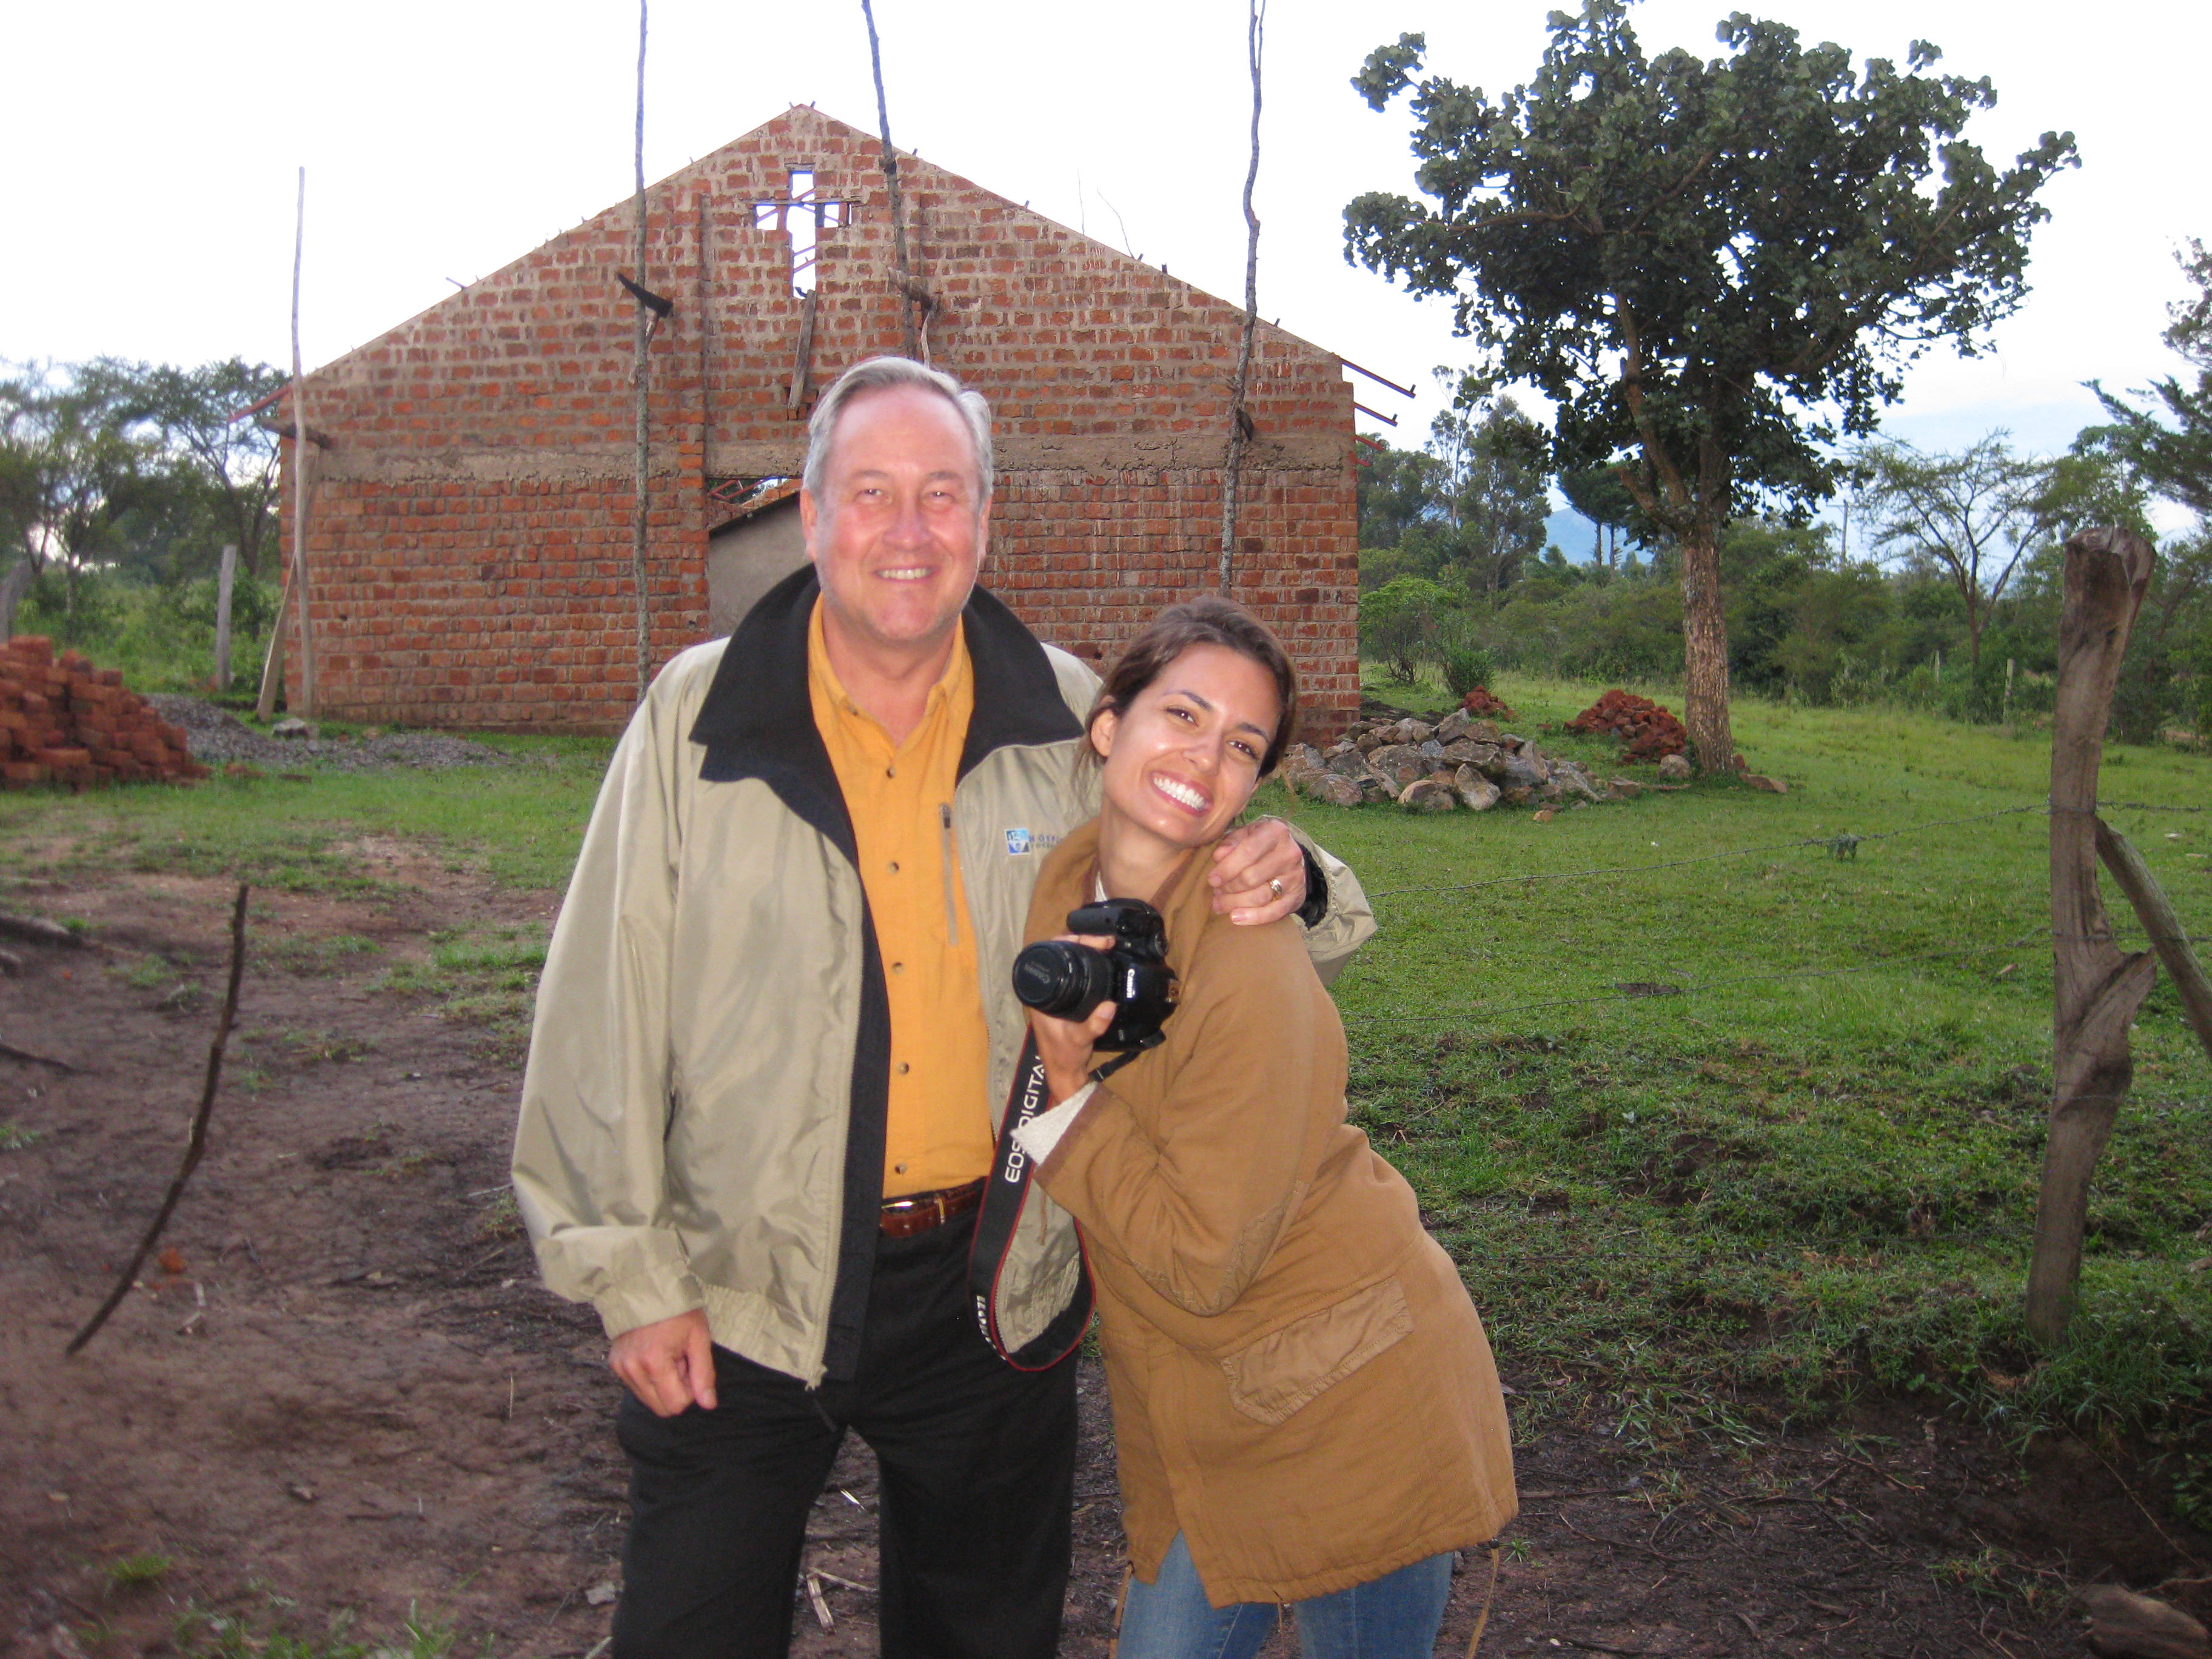 Taking a break from filming Road to Hope. With Torrey DeVitto in Kipkaren, Kenya.